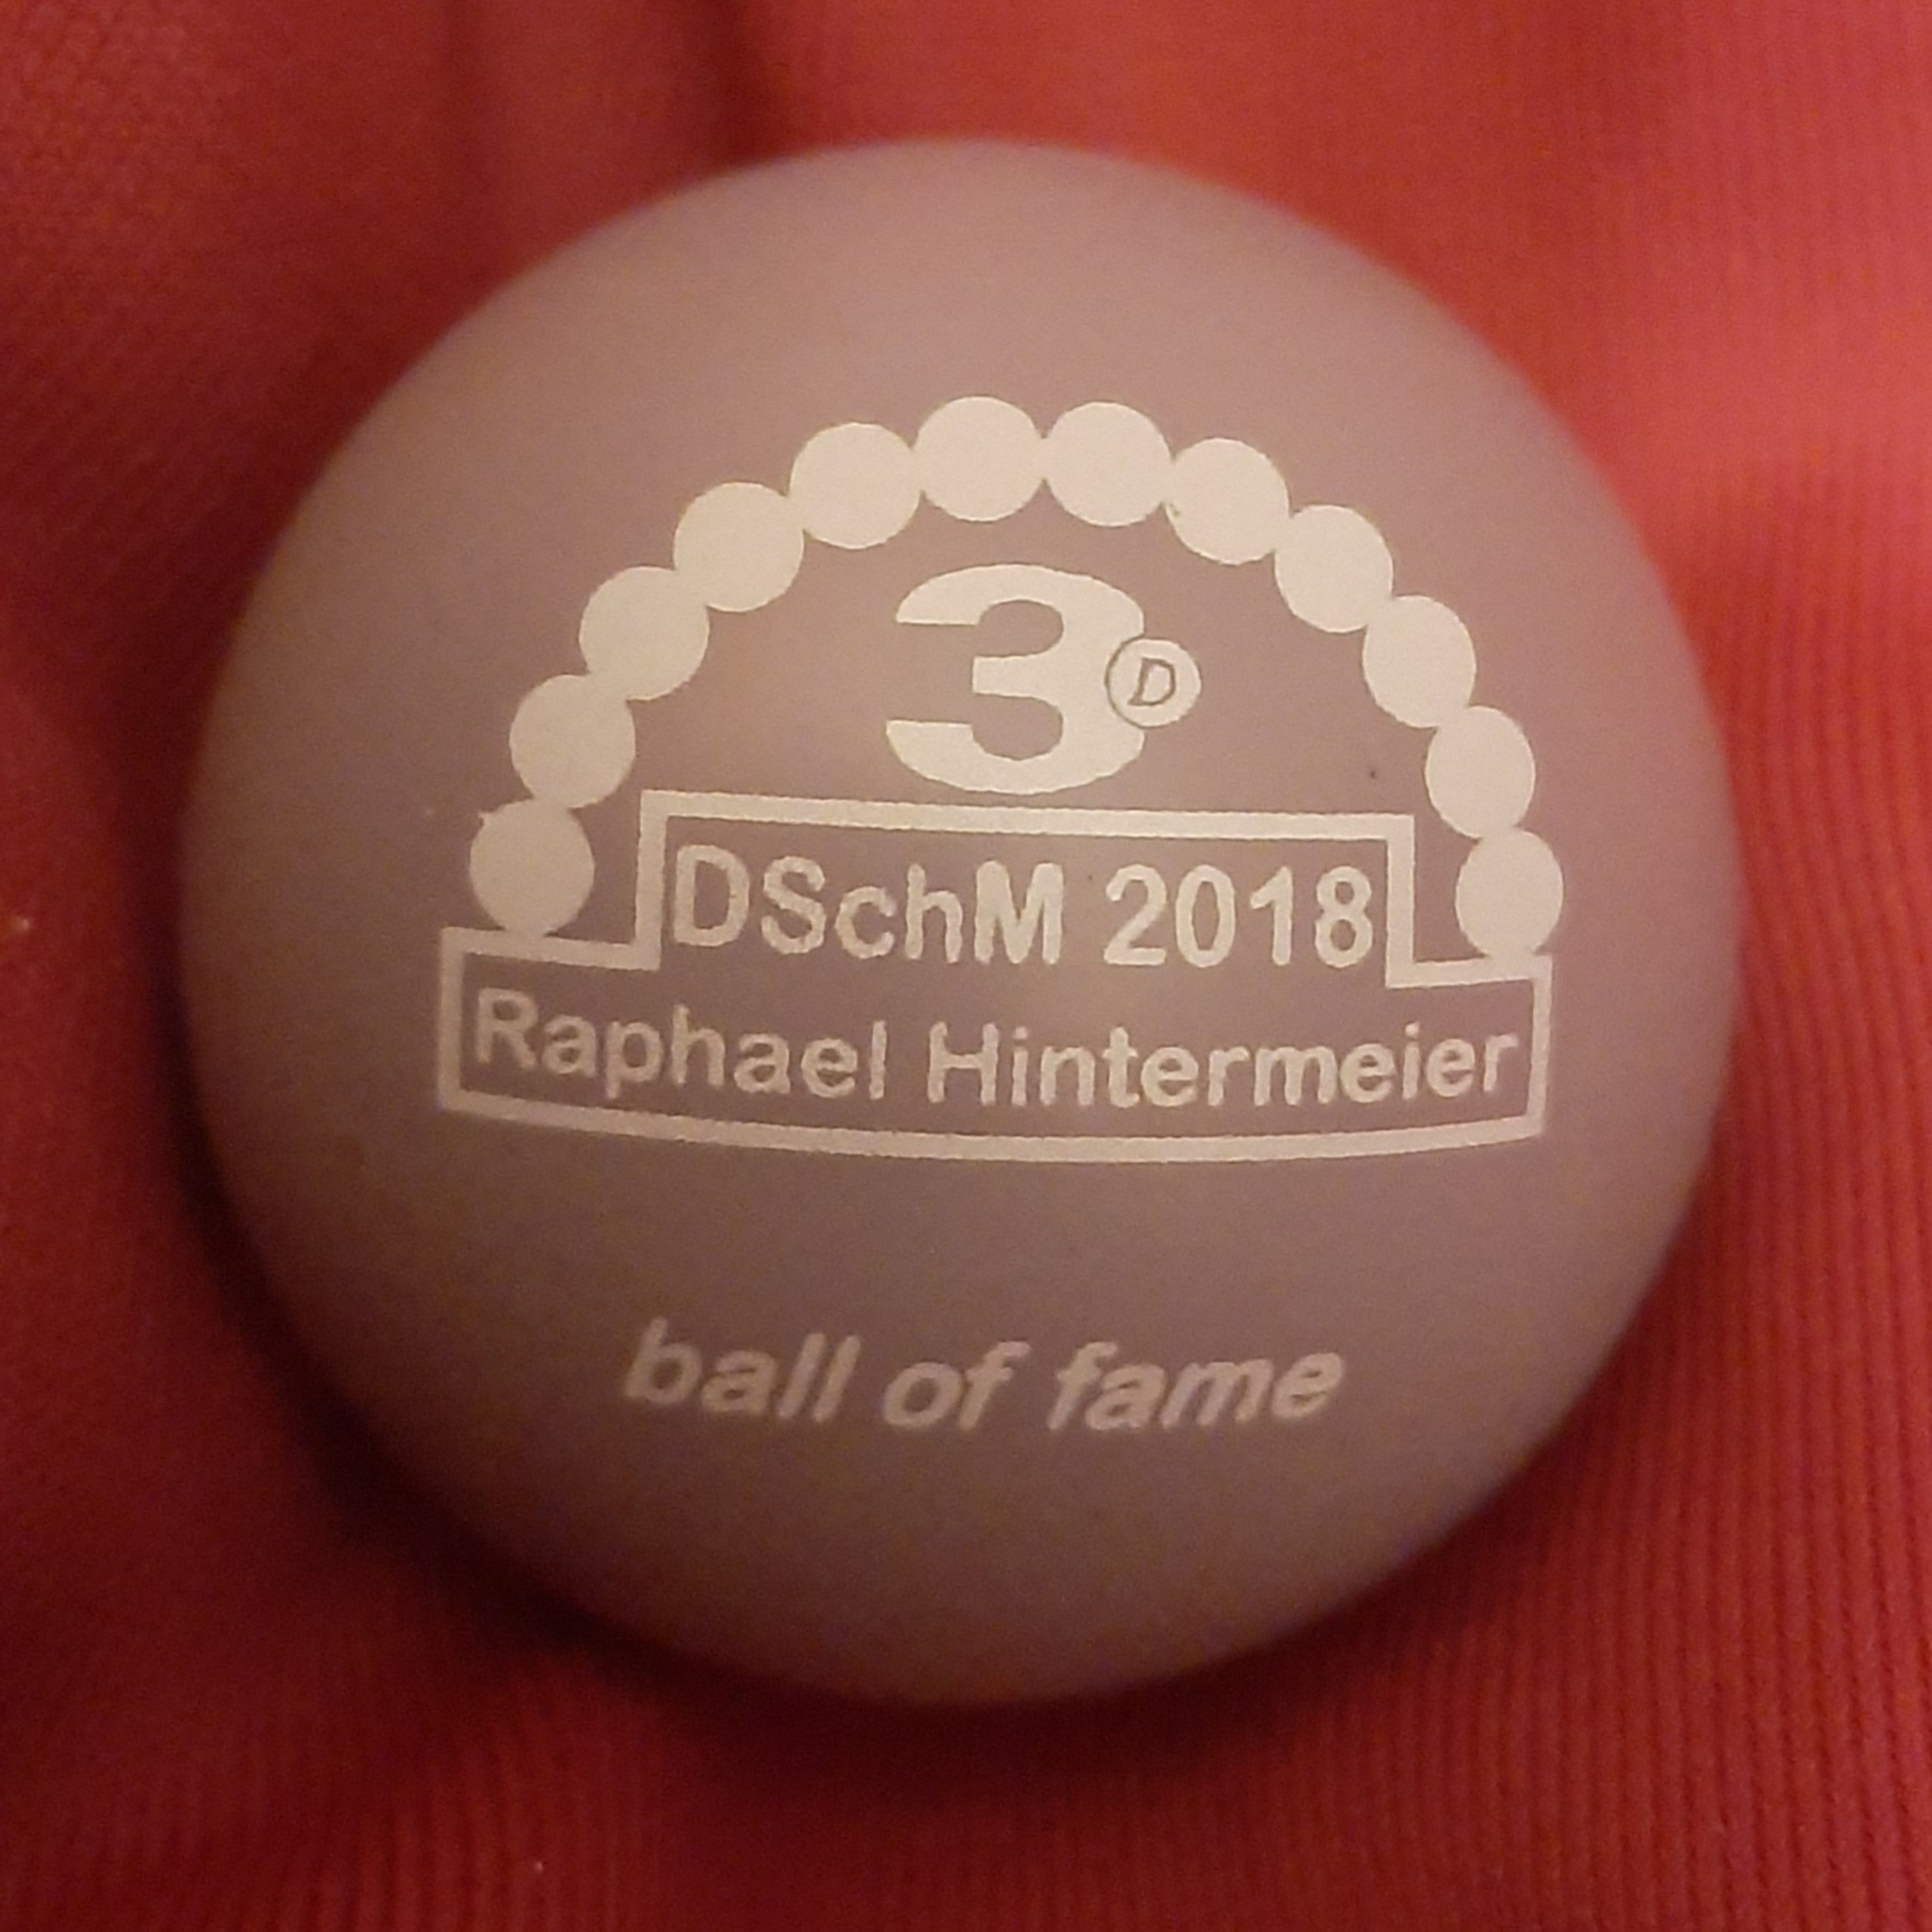 dschm_2018_raphael_hintermeier_ball_of_fame.jpg